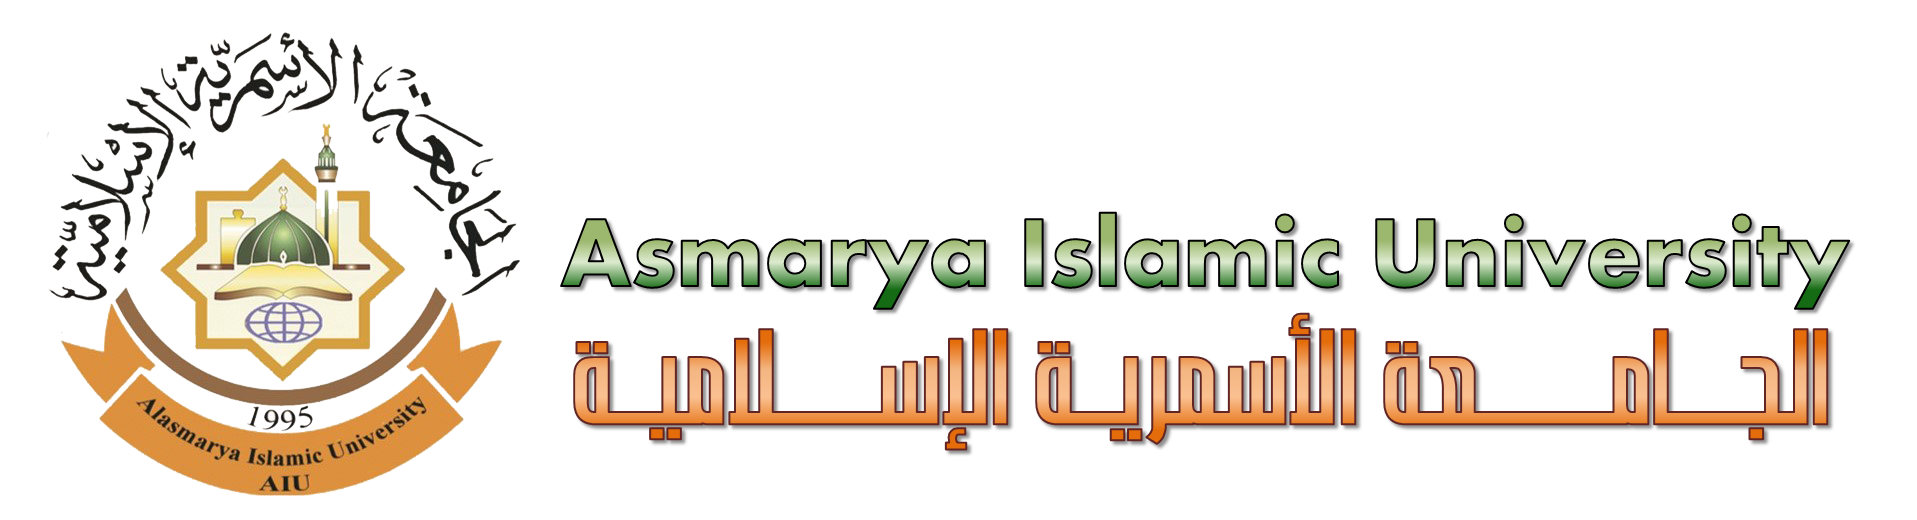 Asmarya Islamic University